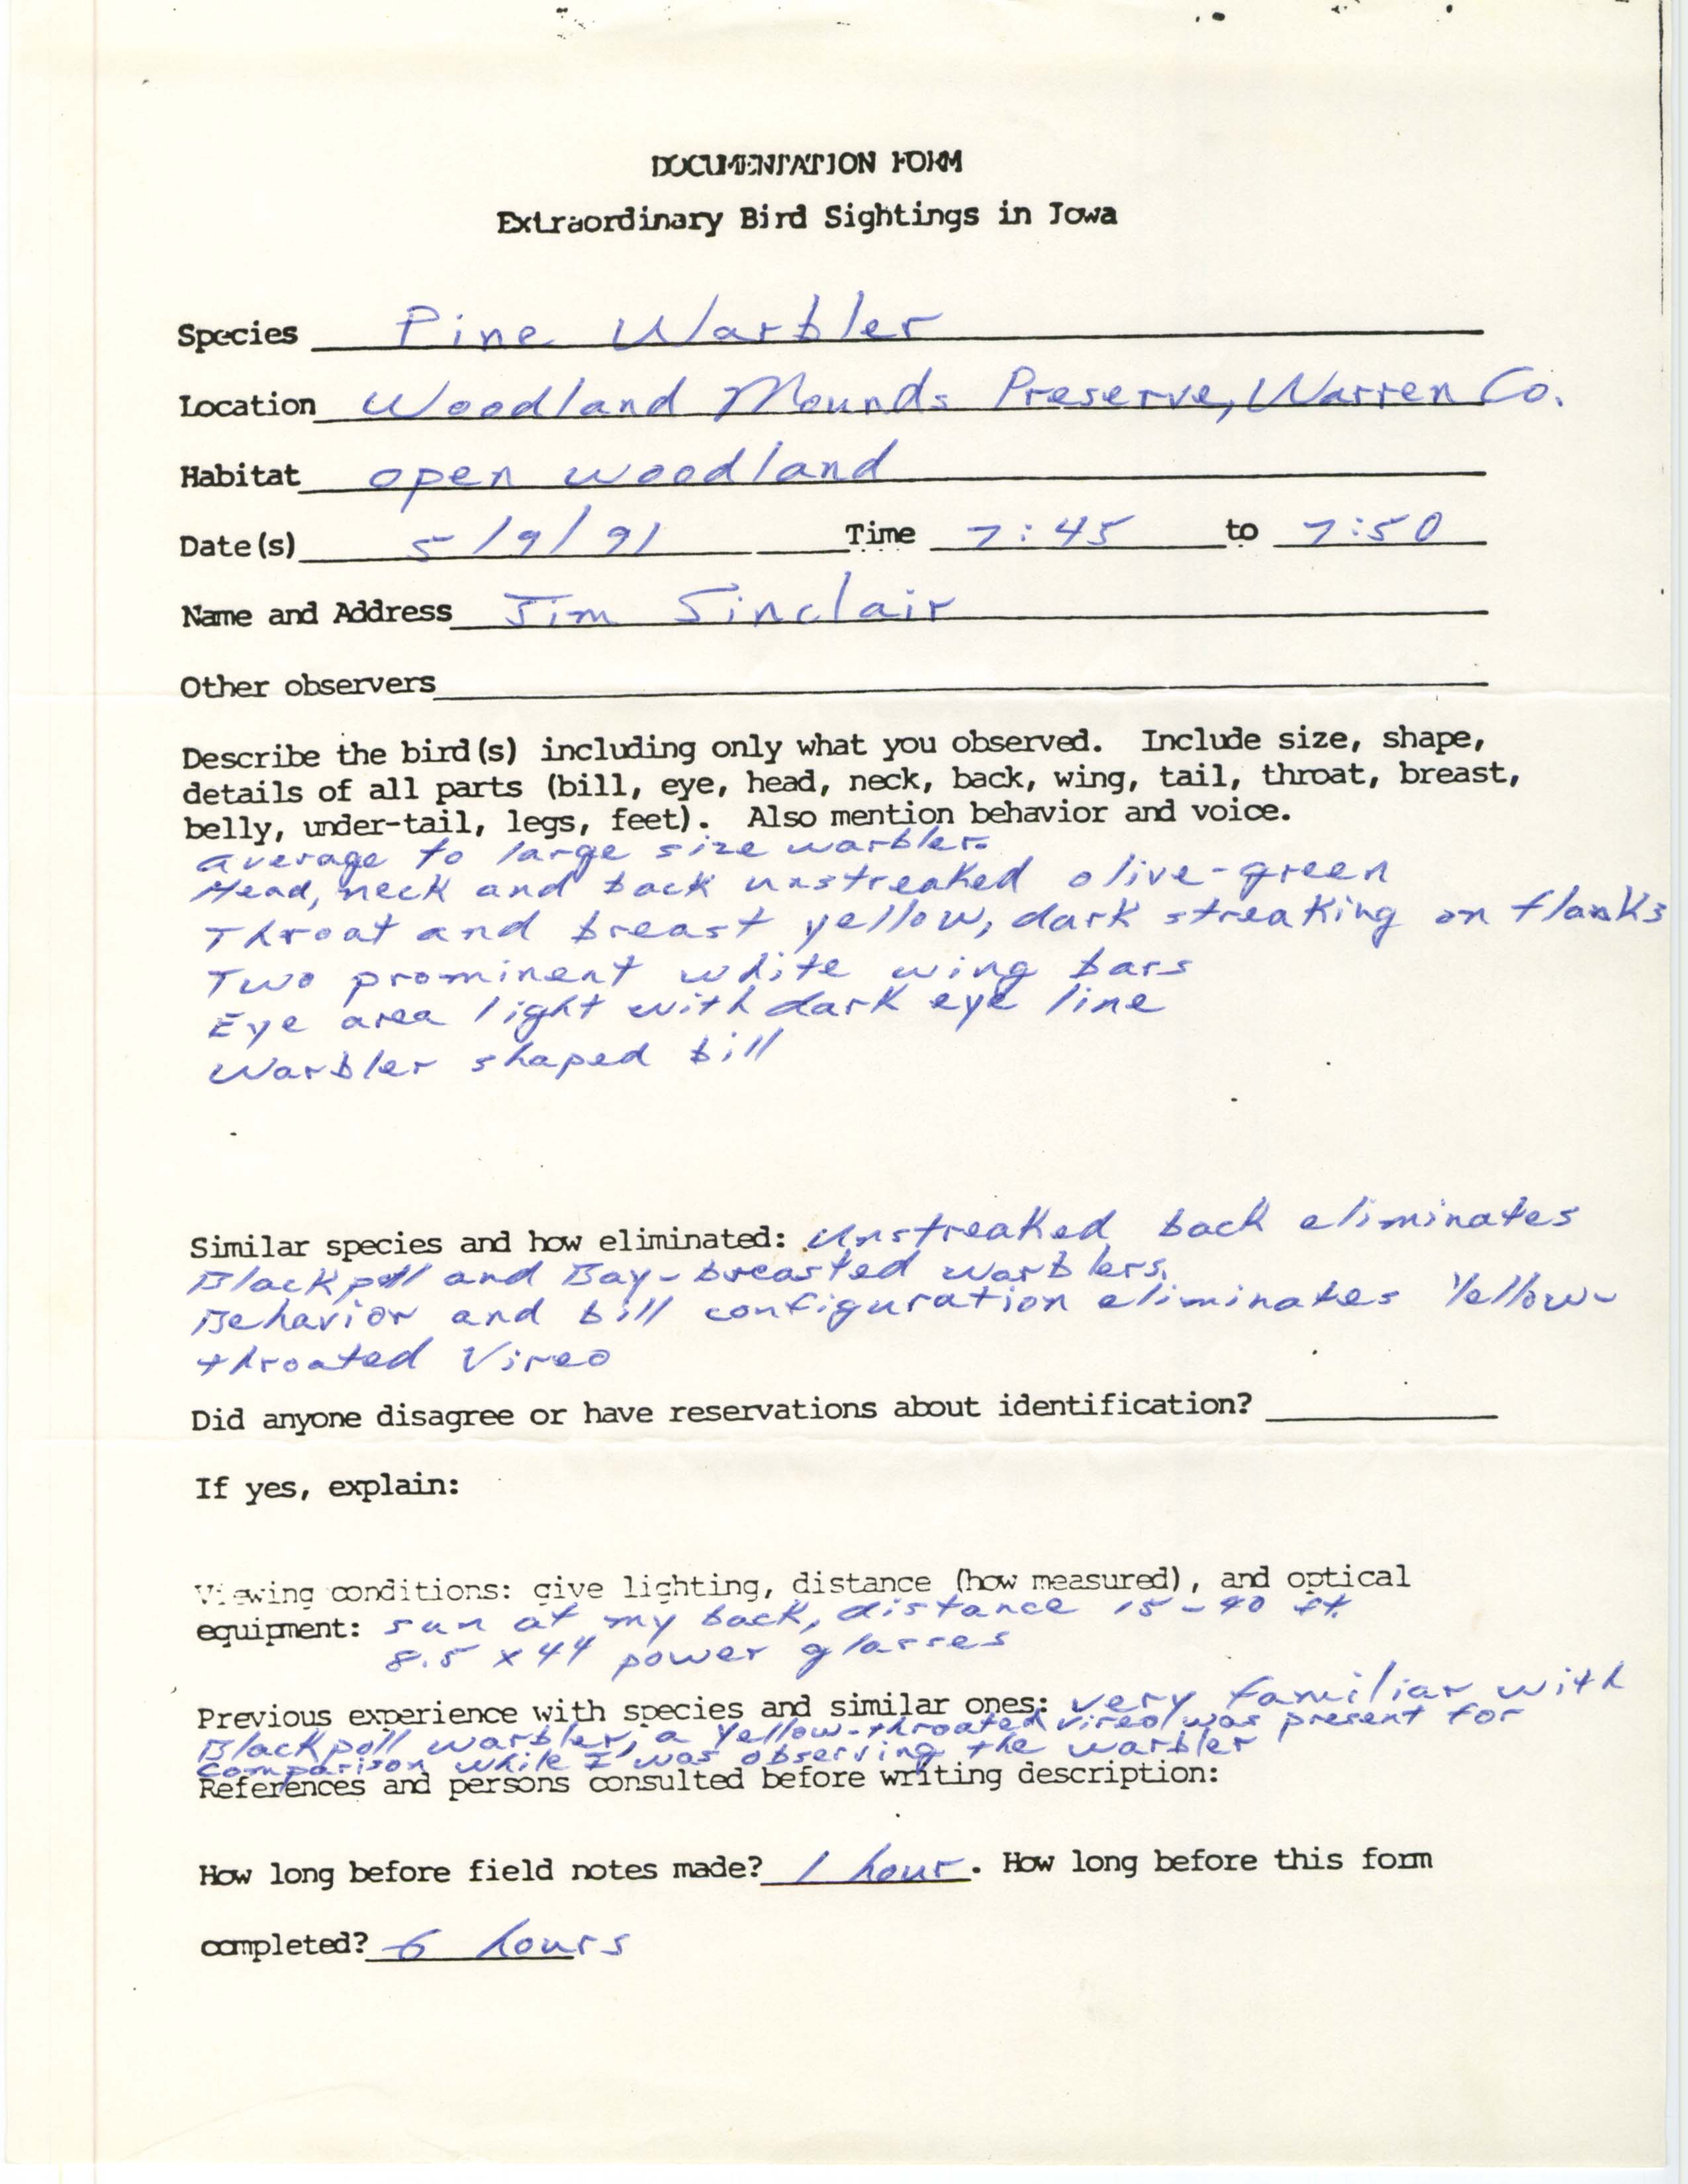 Rare bird documentation form for Pine Warbler at Woodland Mounds State Preserve, 1991